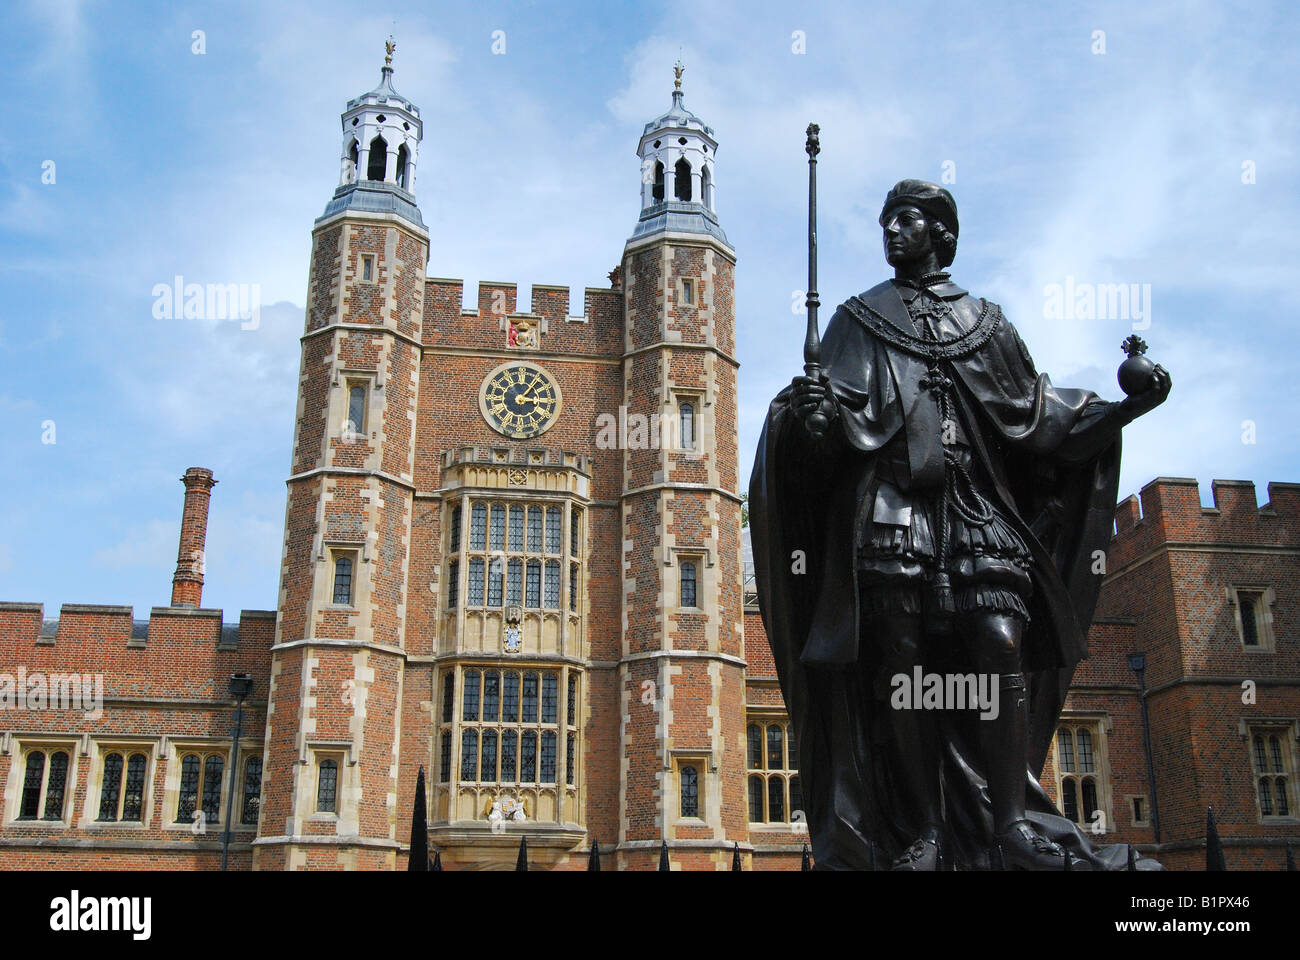 Statue of Henry VI (founder) and Lupton's Tower, School Yard, Eton College, Eton, Berkshire, England, United Kingdom Stock Photo